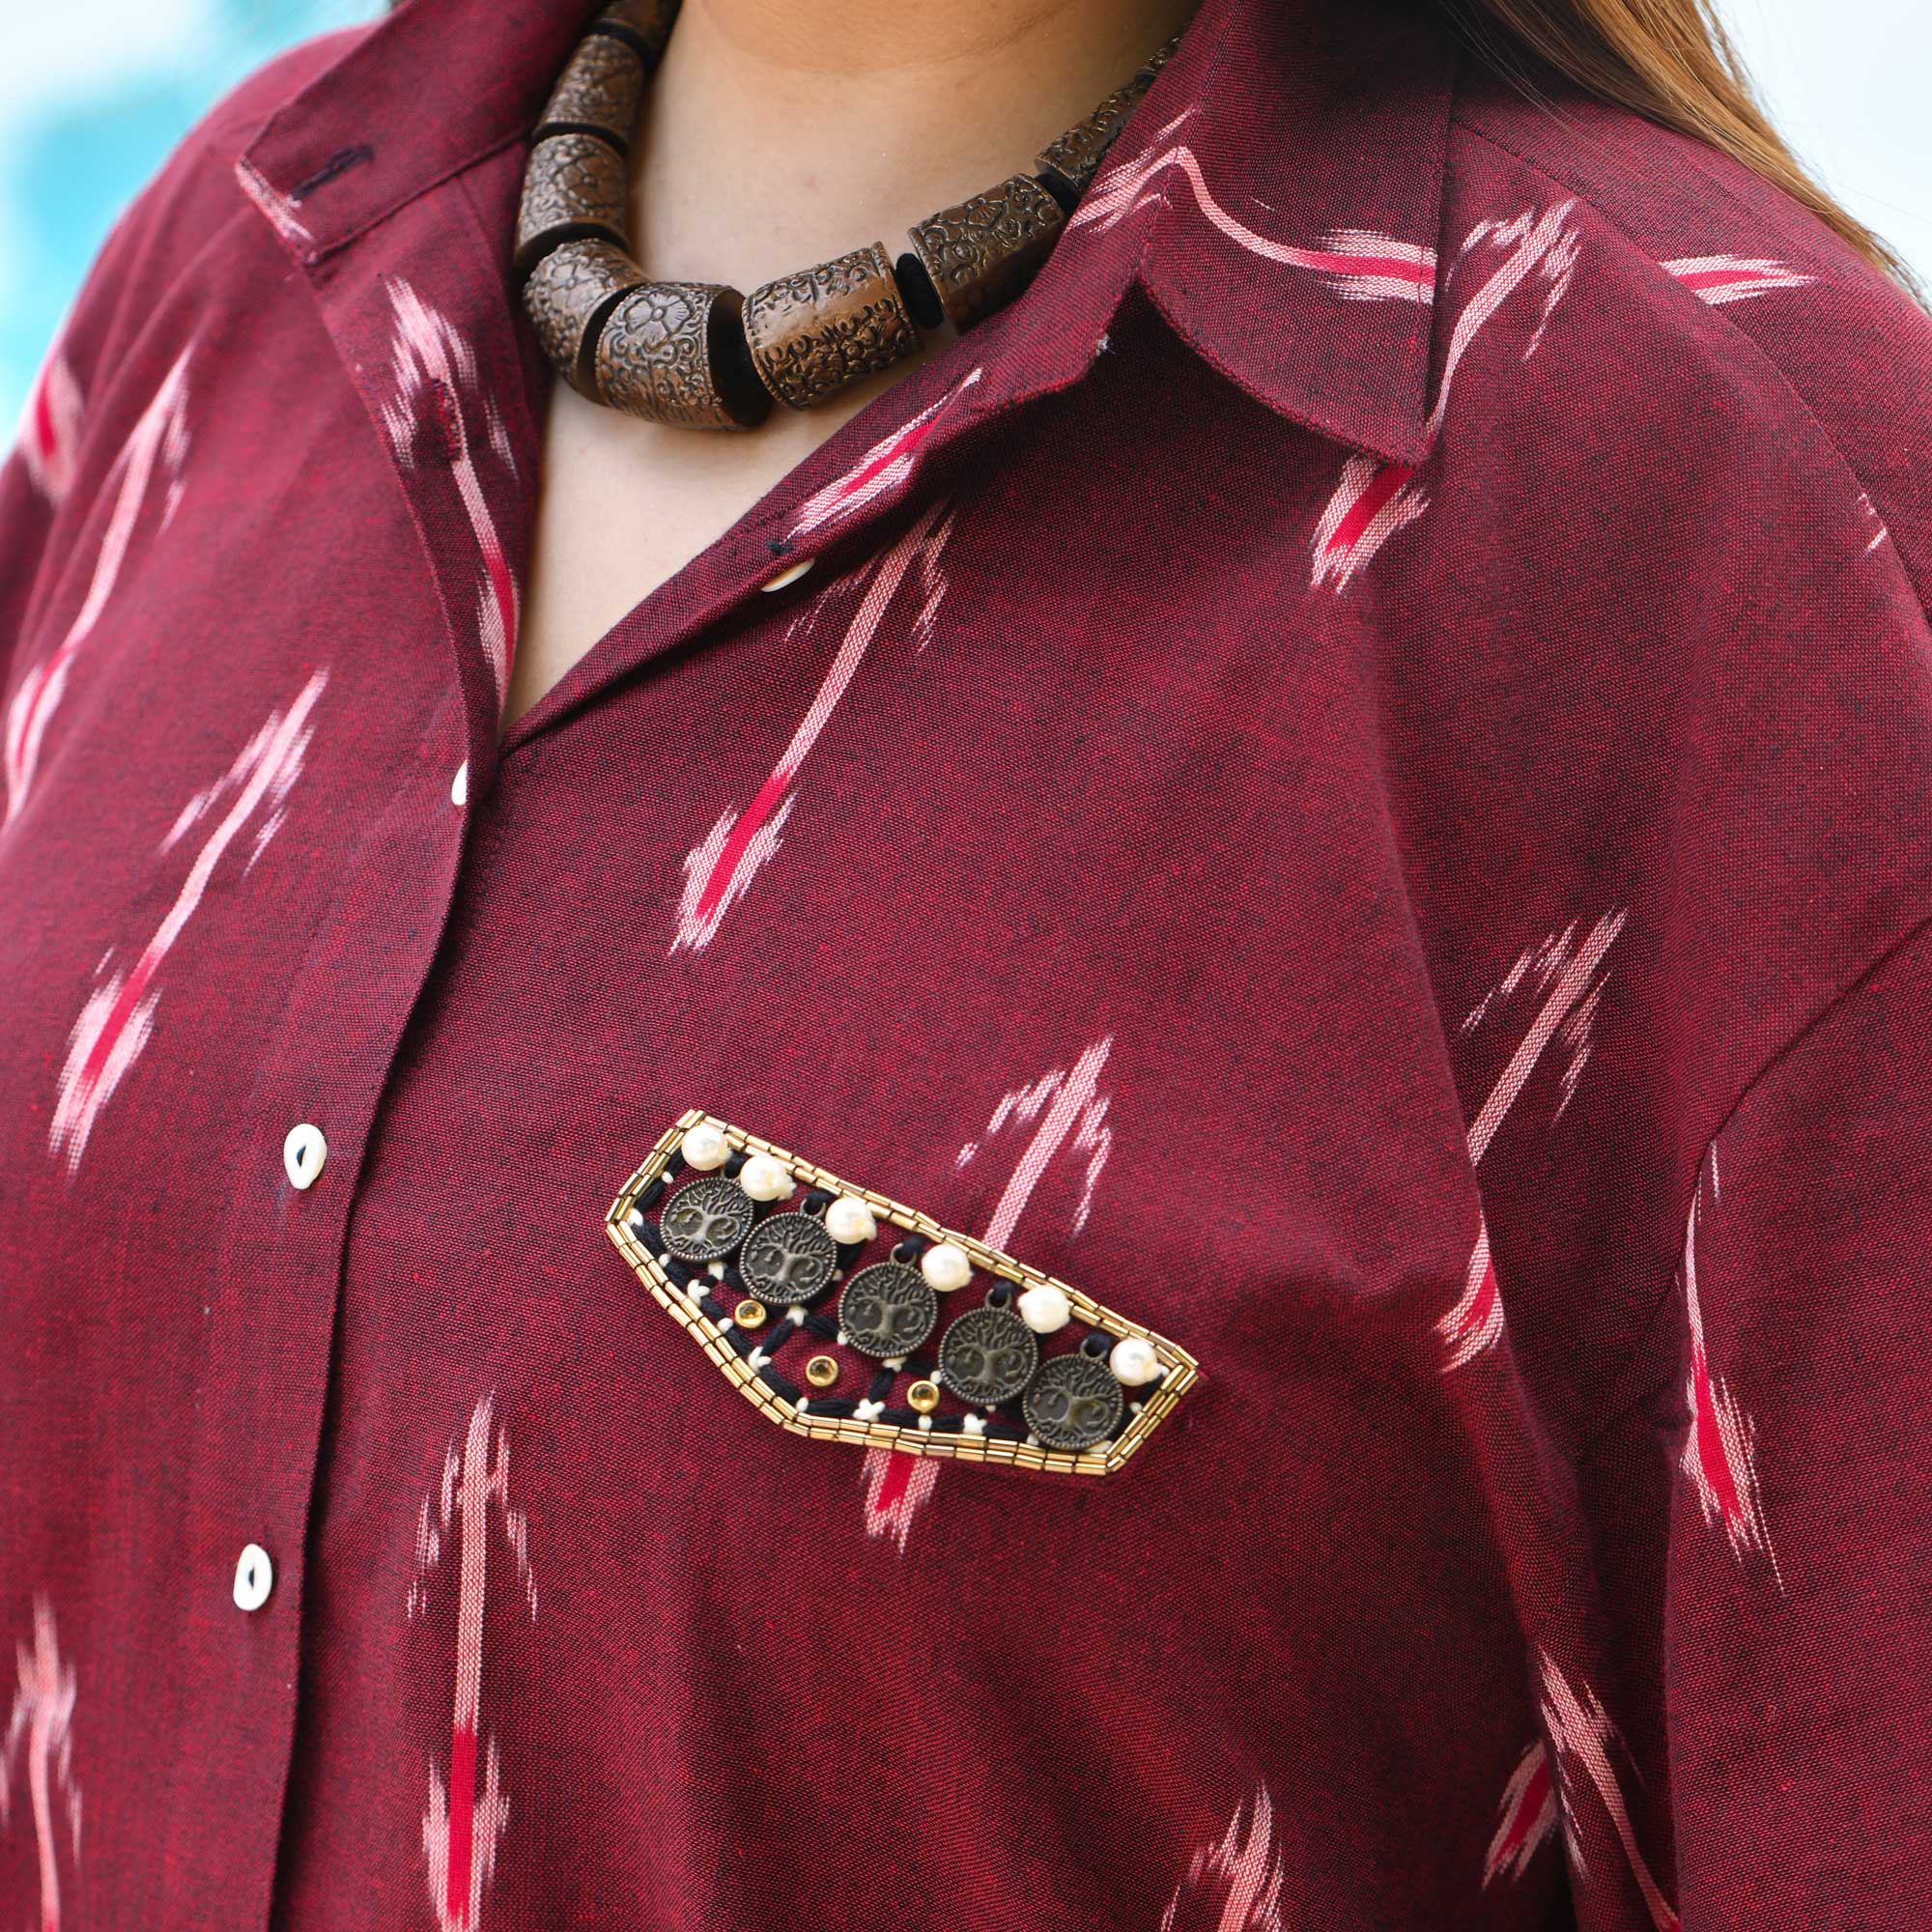 Modern Laila Handwoven Ikkat Embroidered Shirt (Maroon)